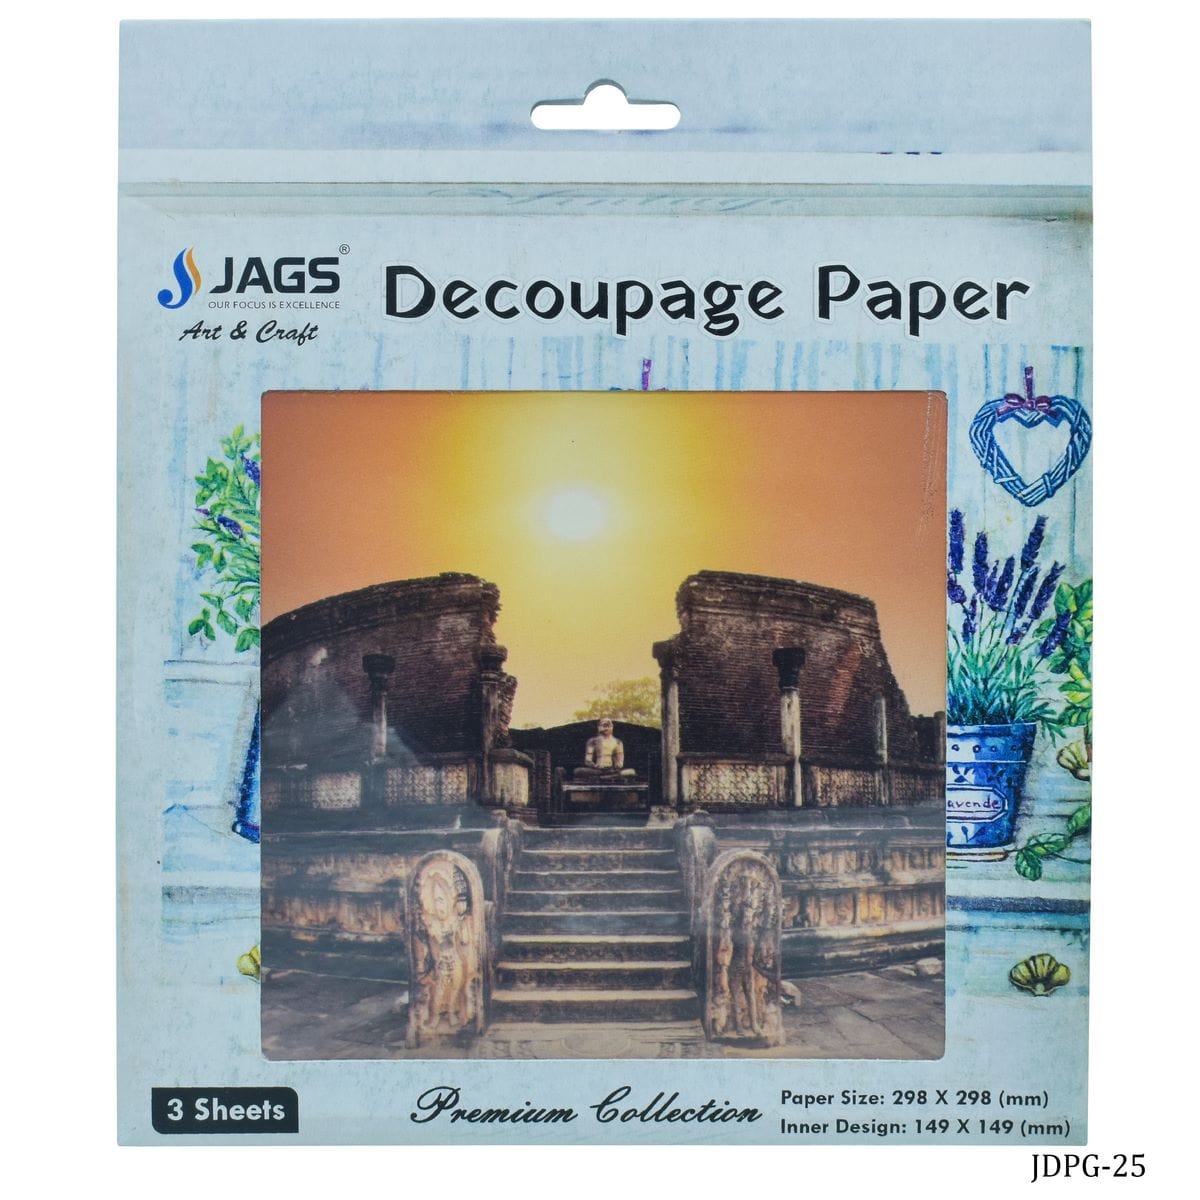 jags-mumbai Decoupage Jags Decoupage Paper Fort With Buddha JDPG-25